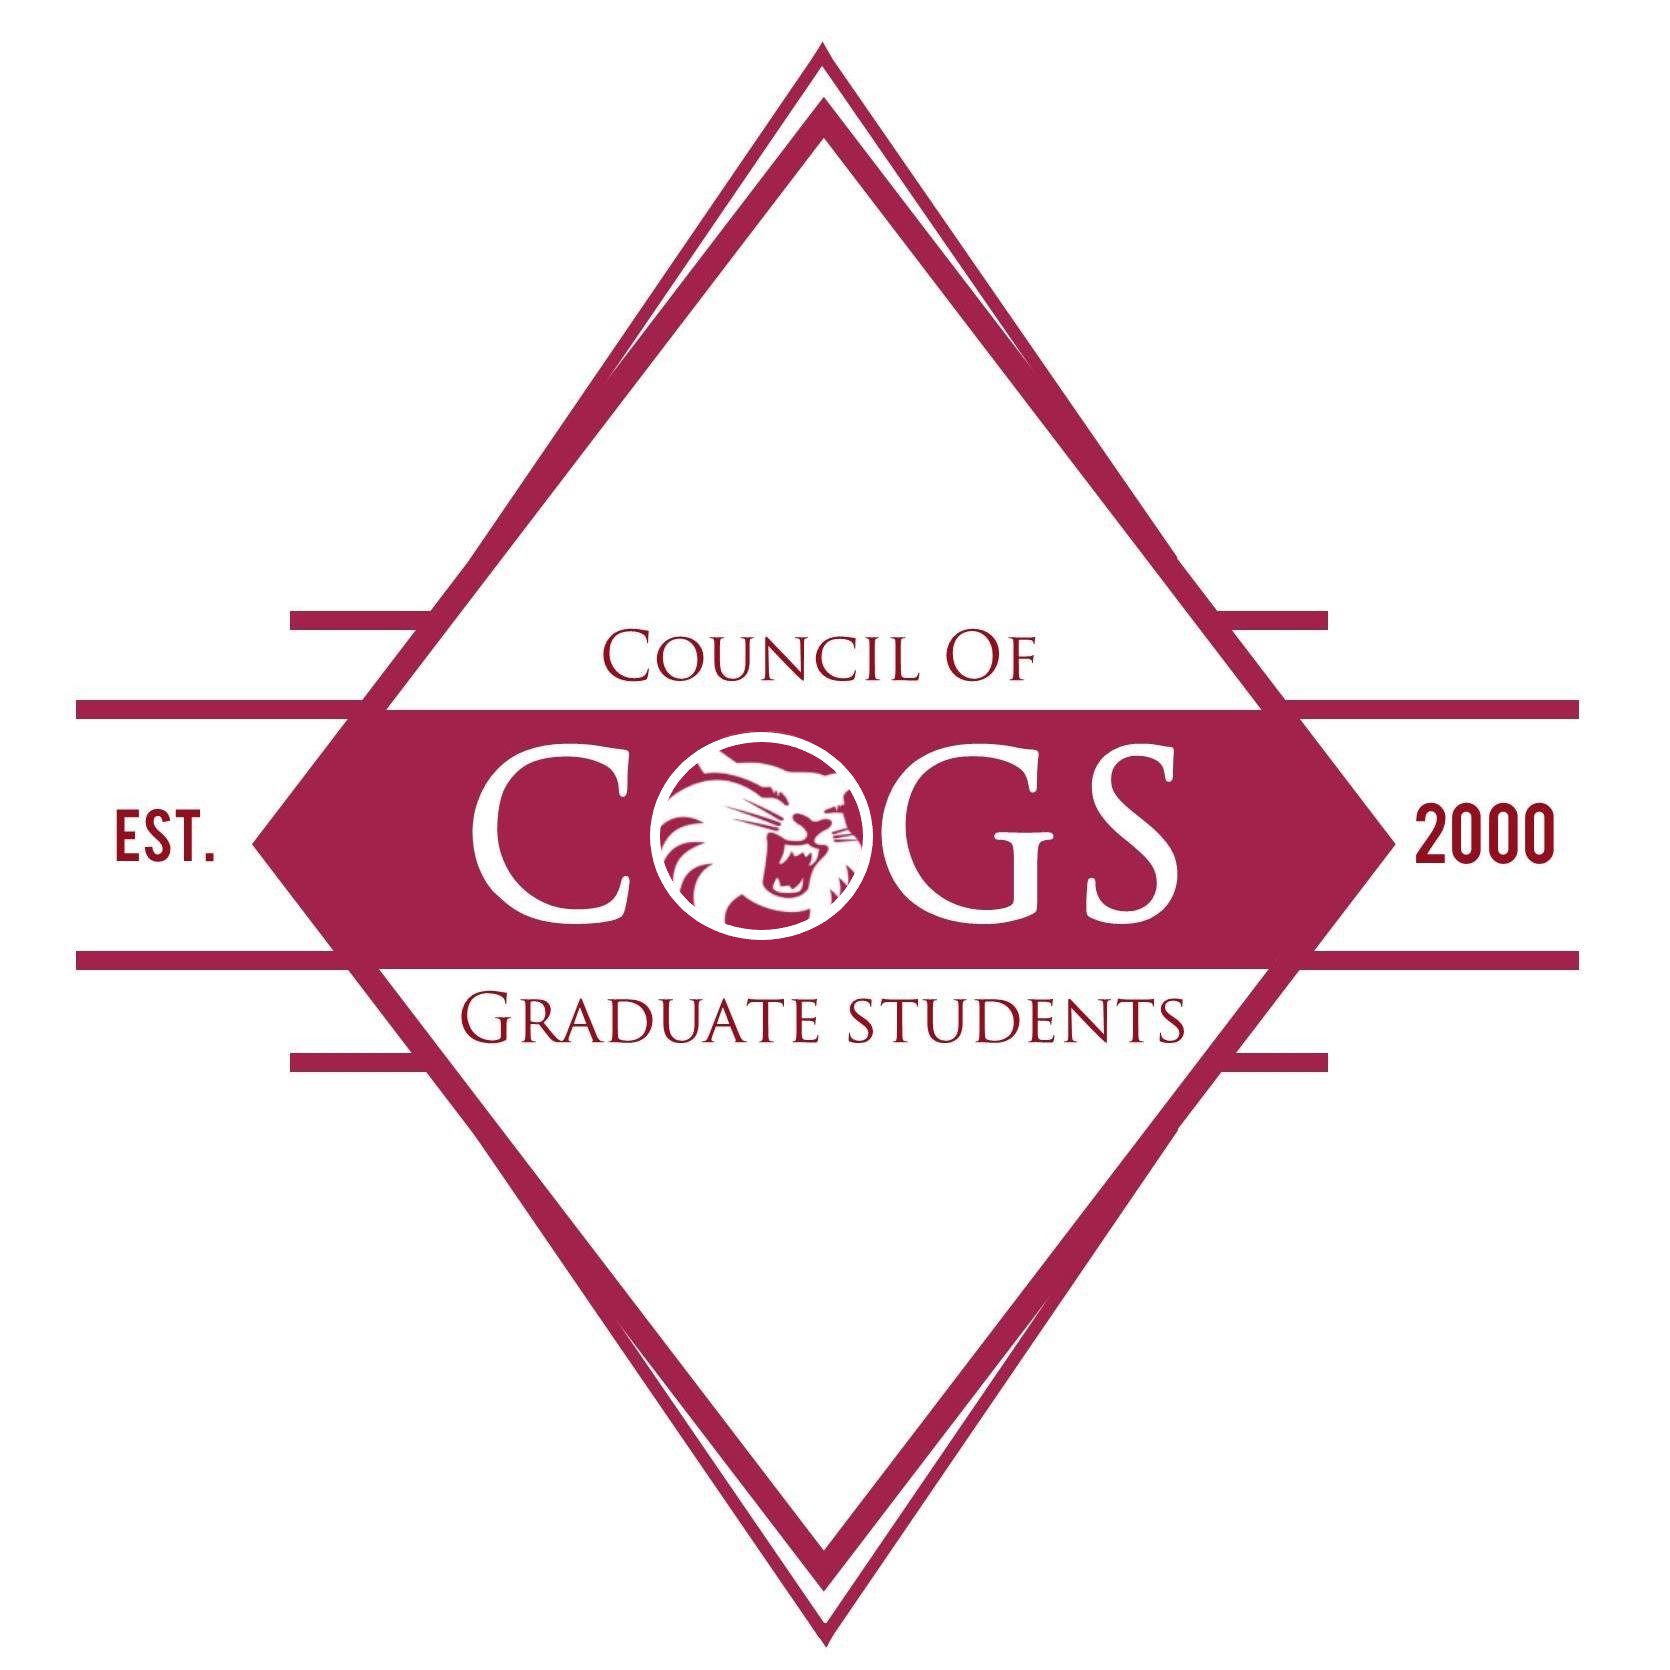 Council of Graduate Students logo